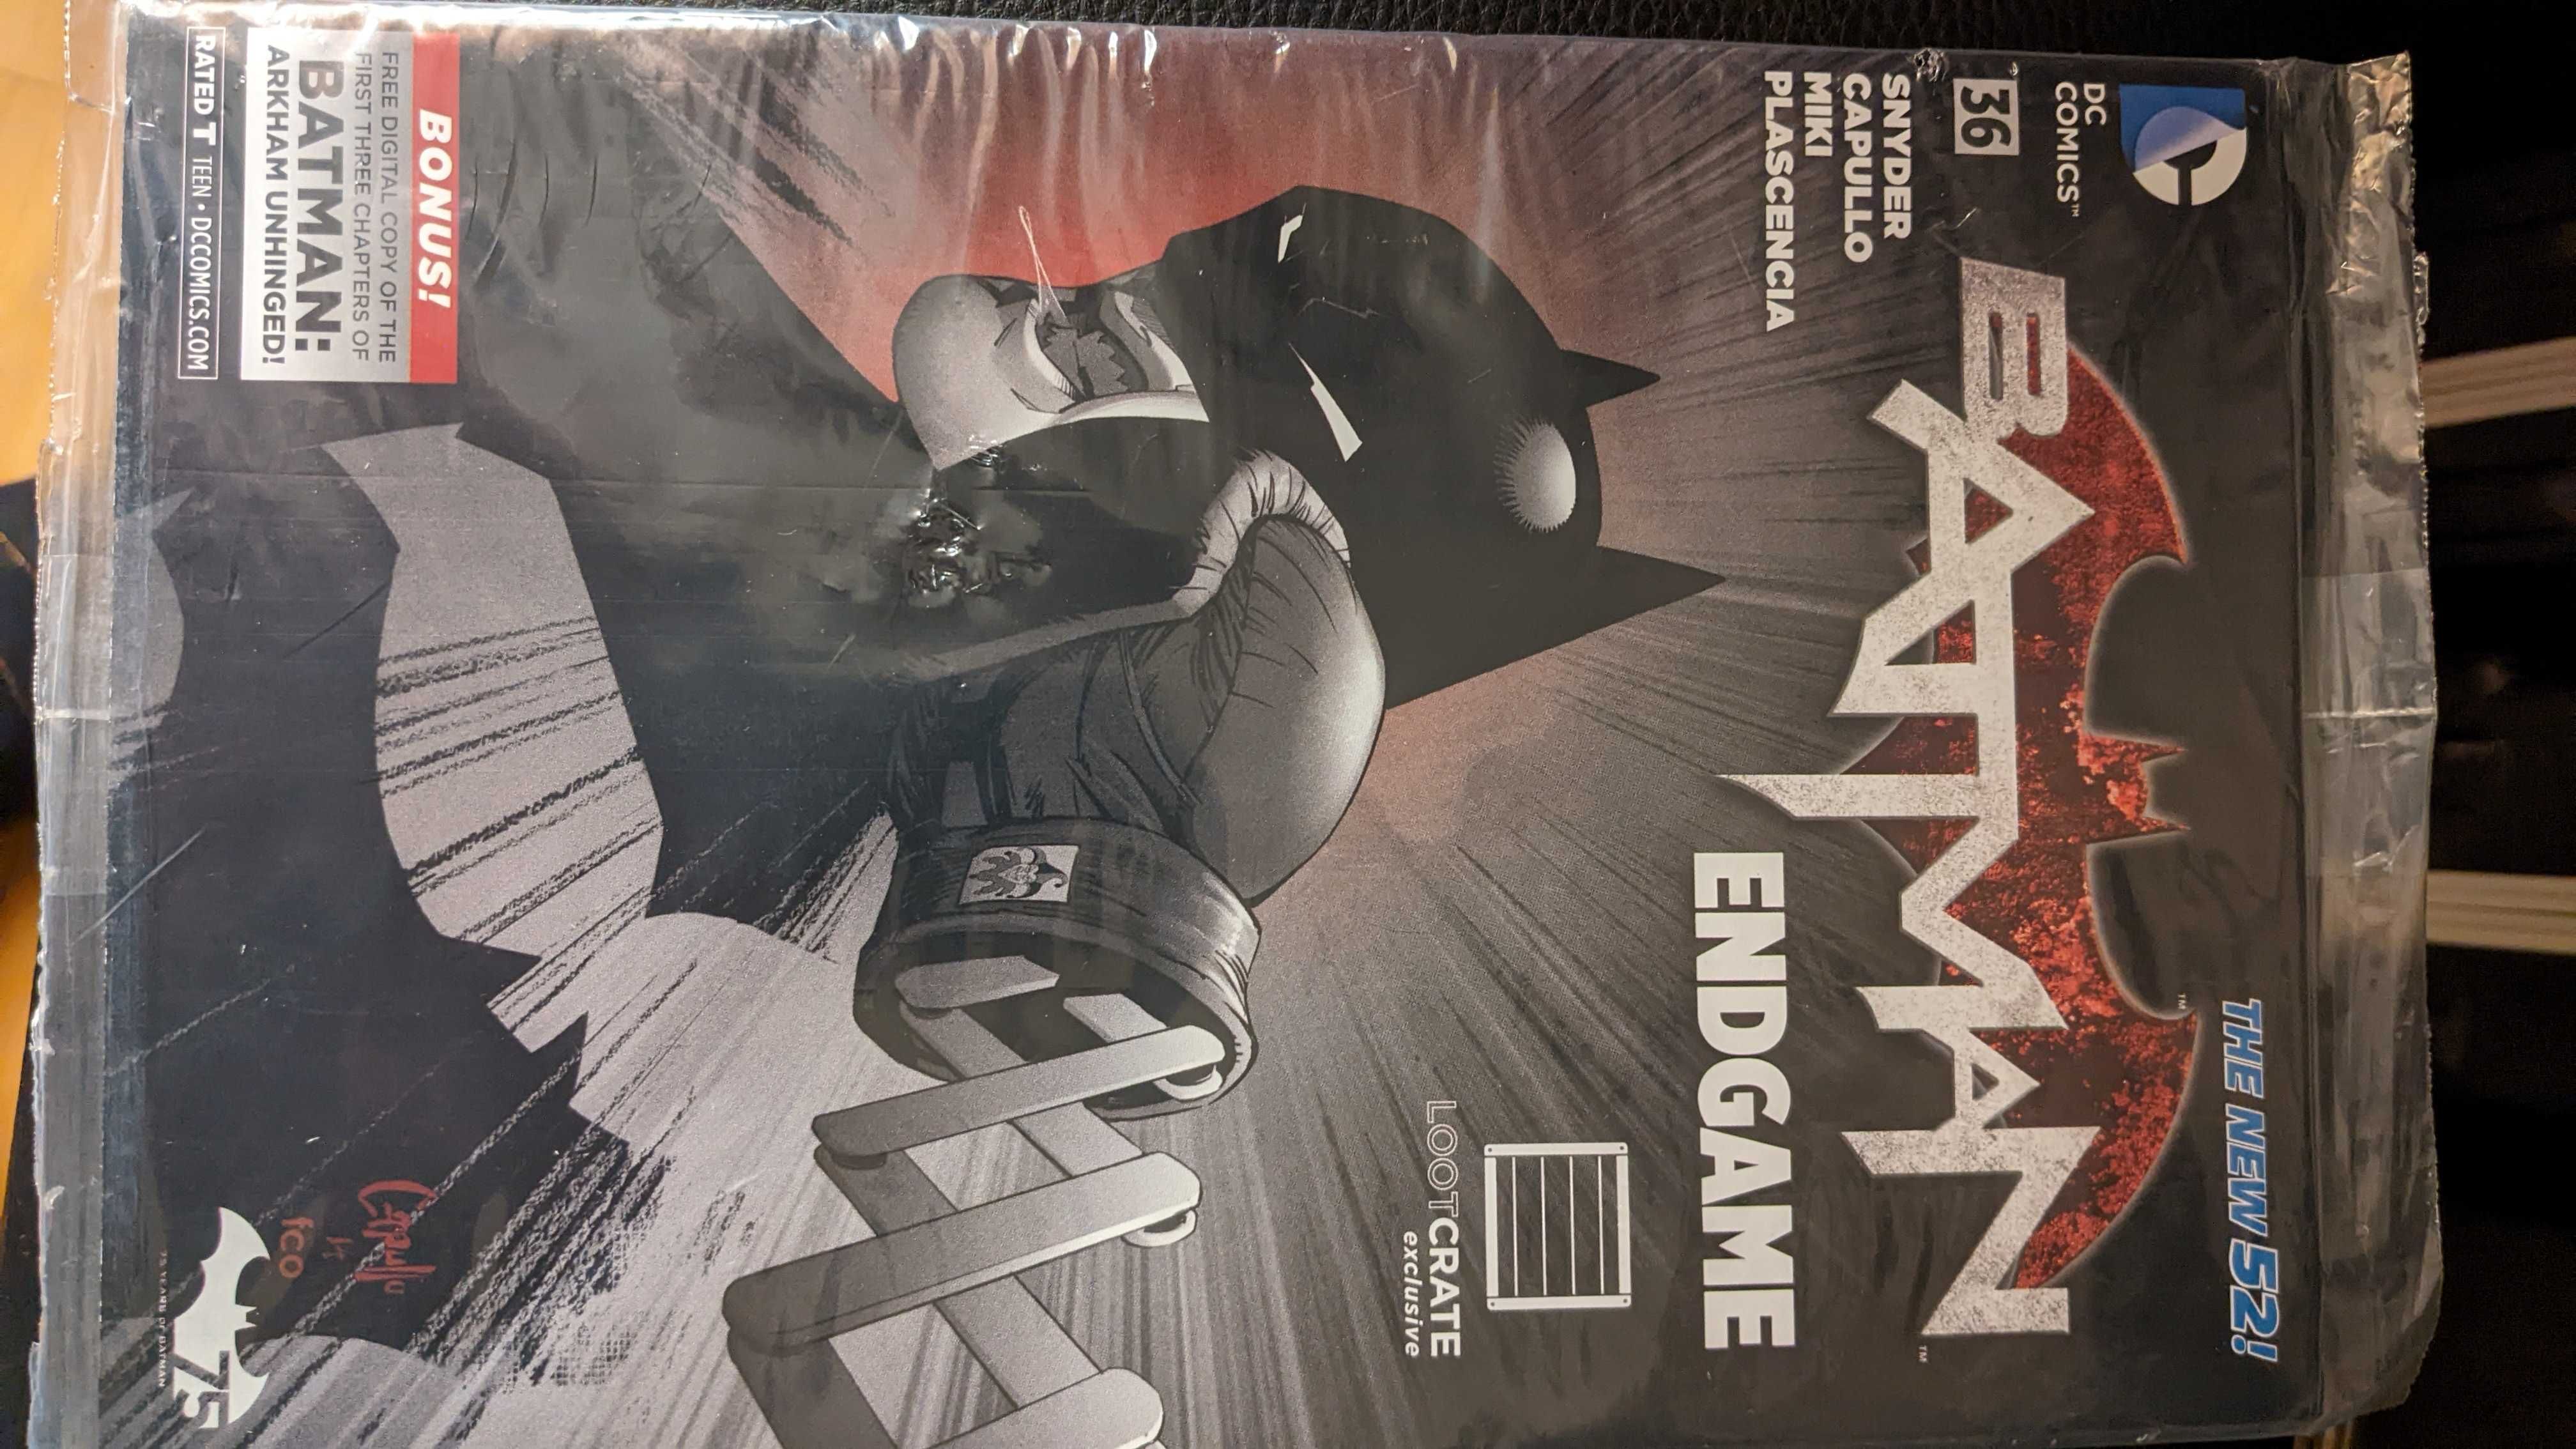 Posters A4 Marvel, DC e livro Batman Endgame